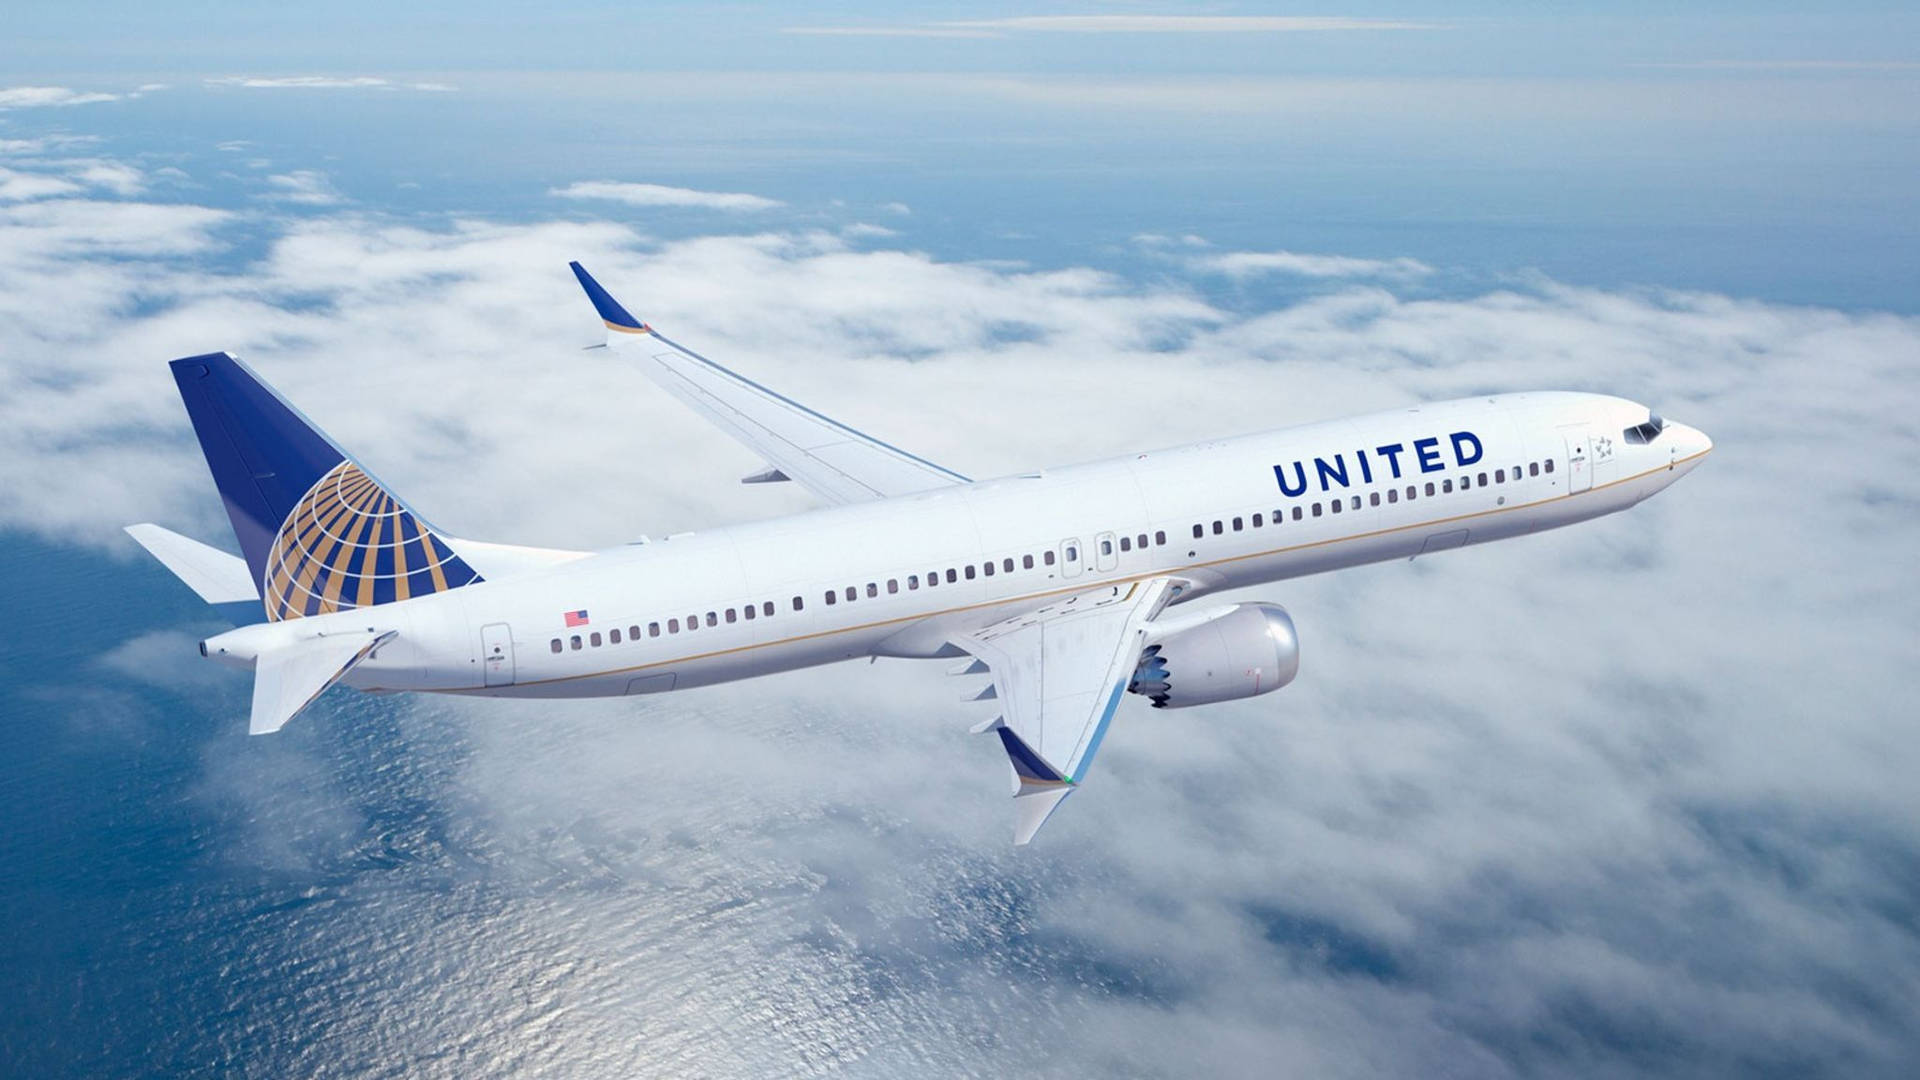 In-flight White United Airlines Plane Wallpaper